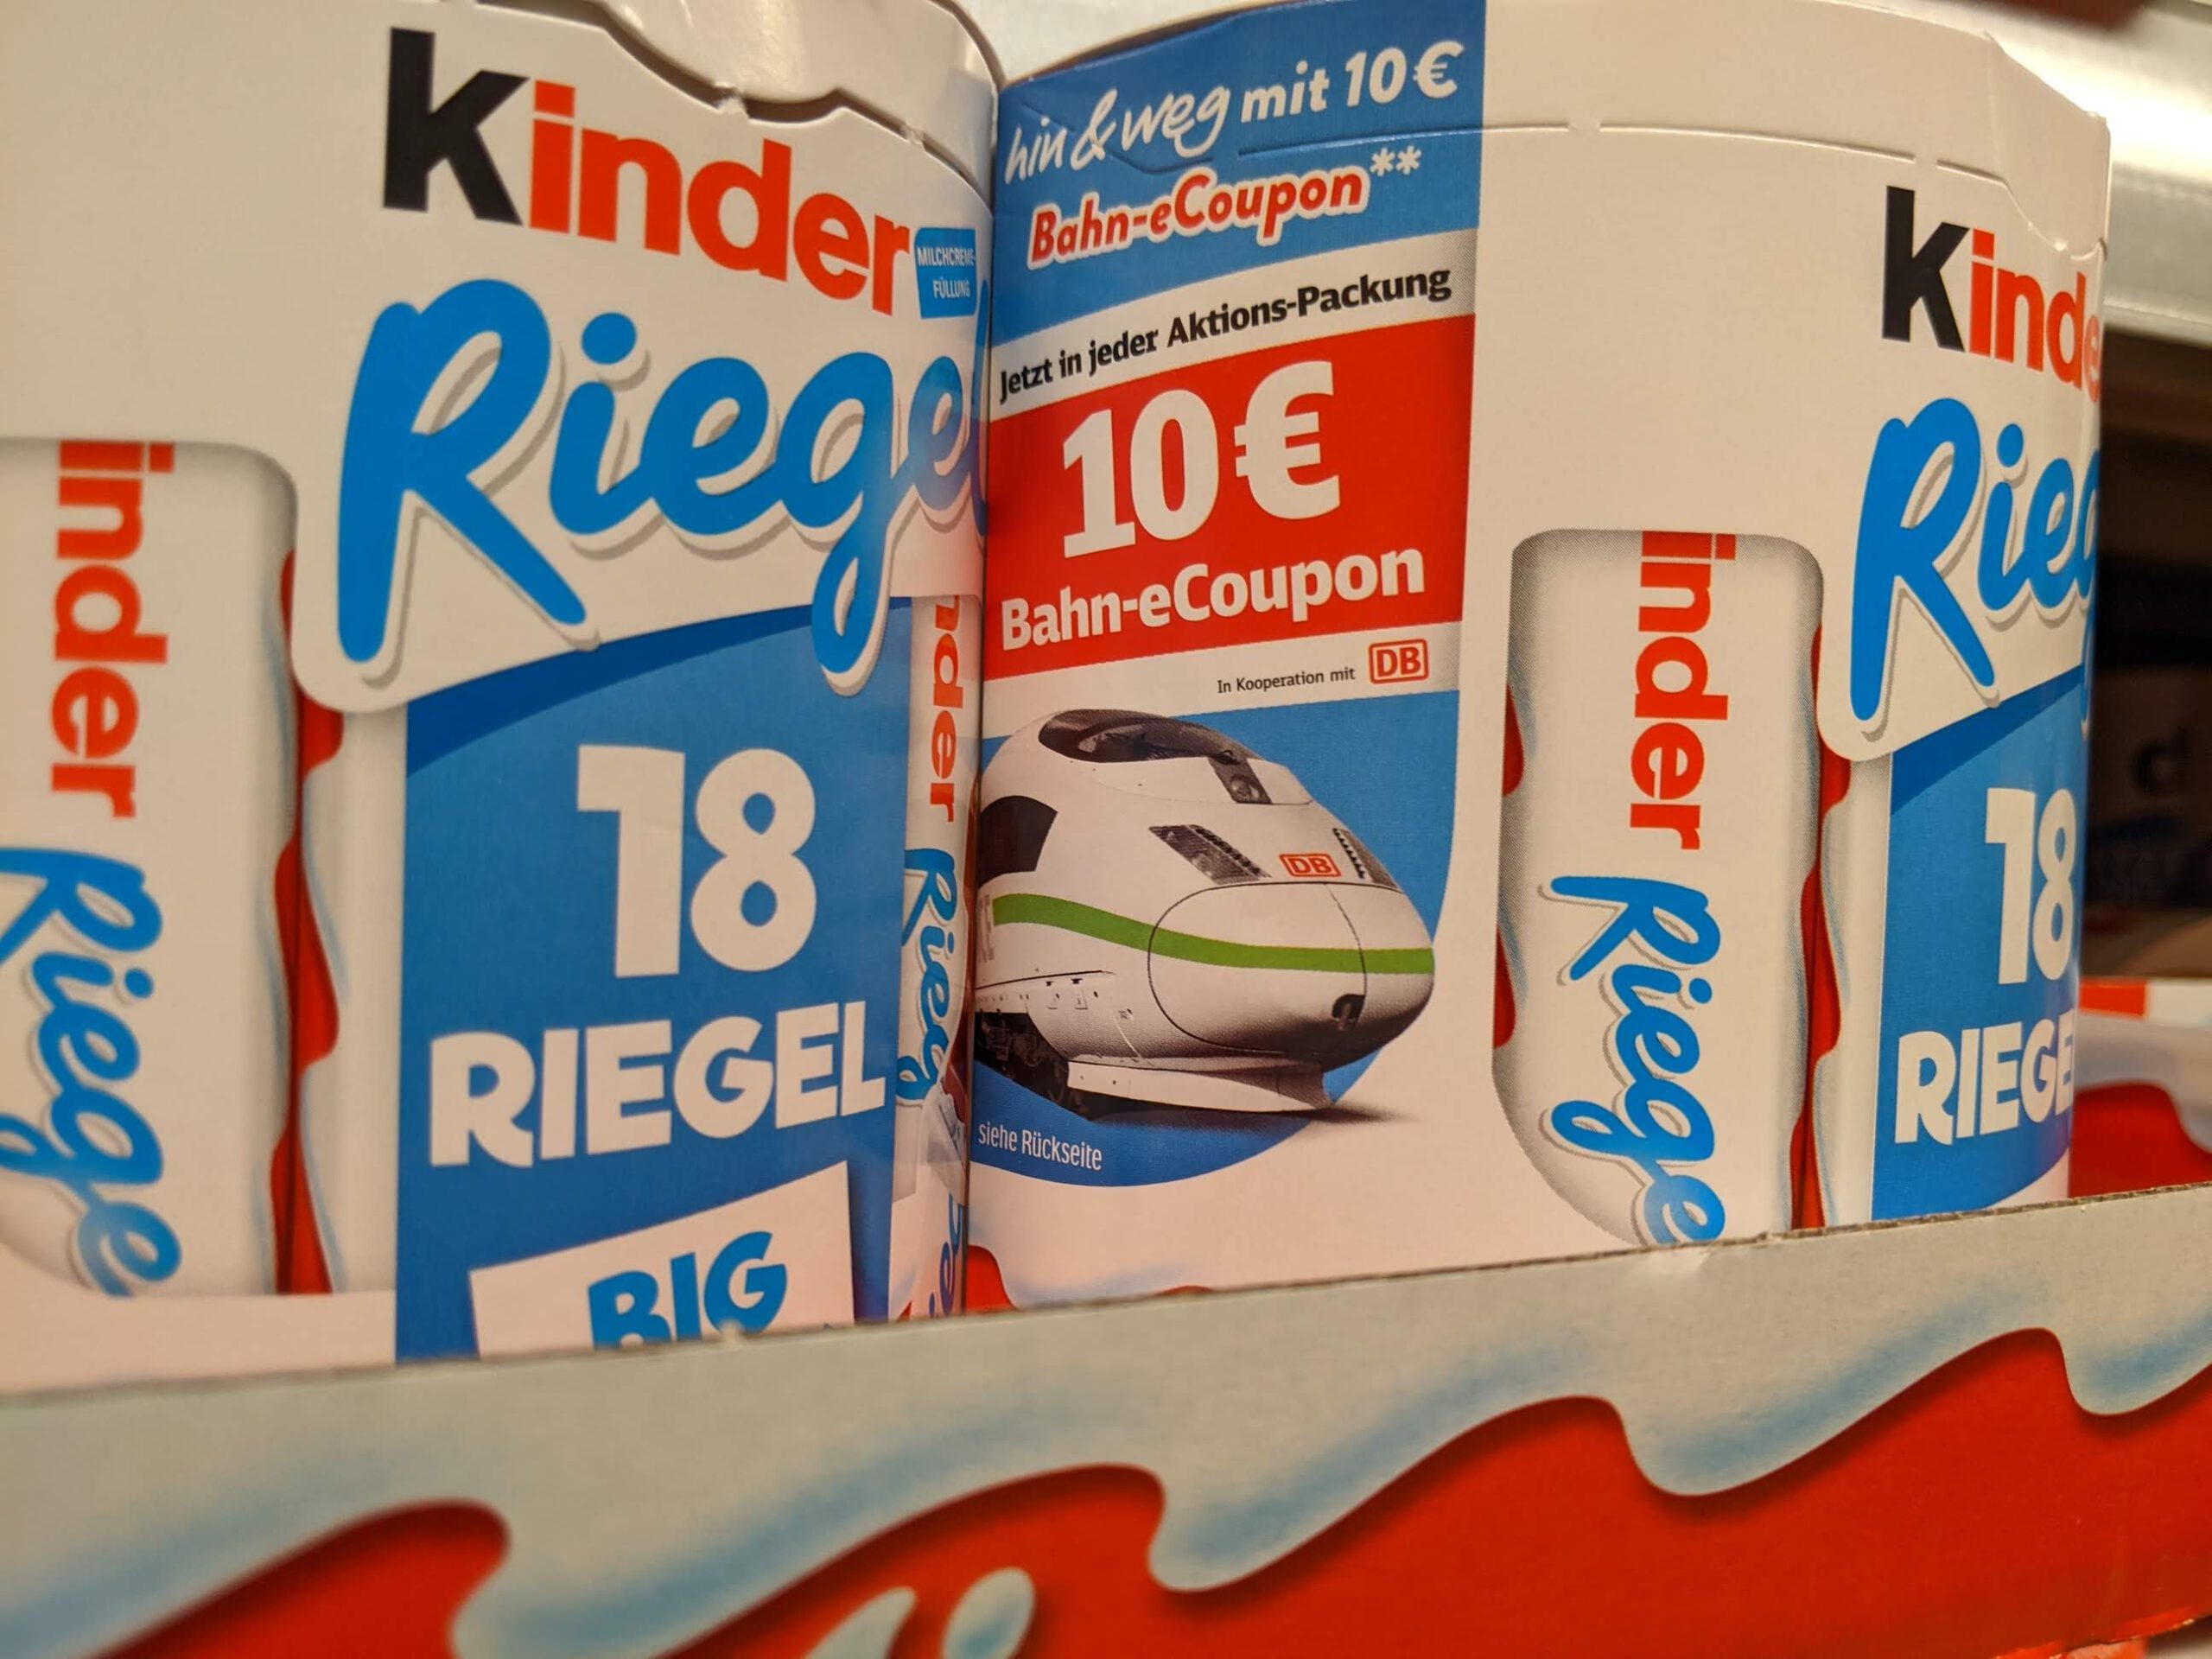 Ferrero Hin & weg: Bahn 10 Euro eCoupon Rabatt-Code gratis - Code eingeben - Hanuta, Duplo, Kinder Bueno und Kinder Country